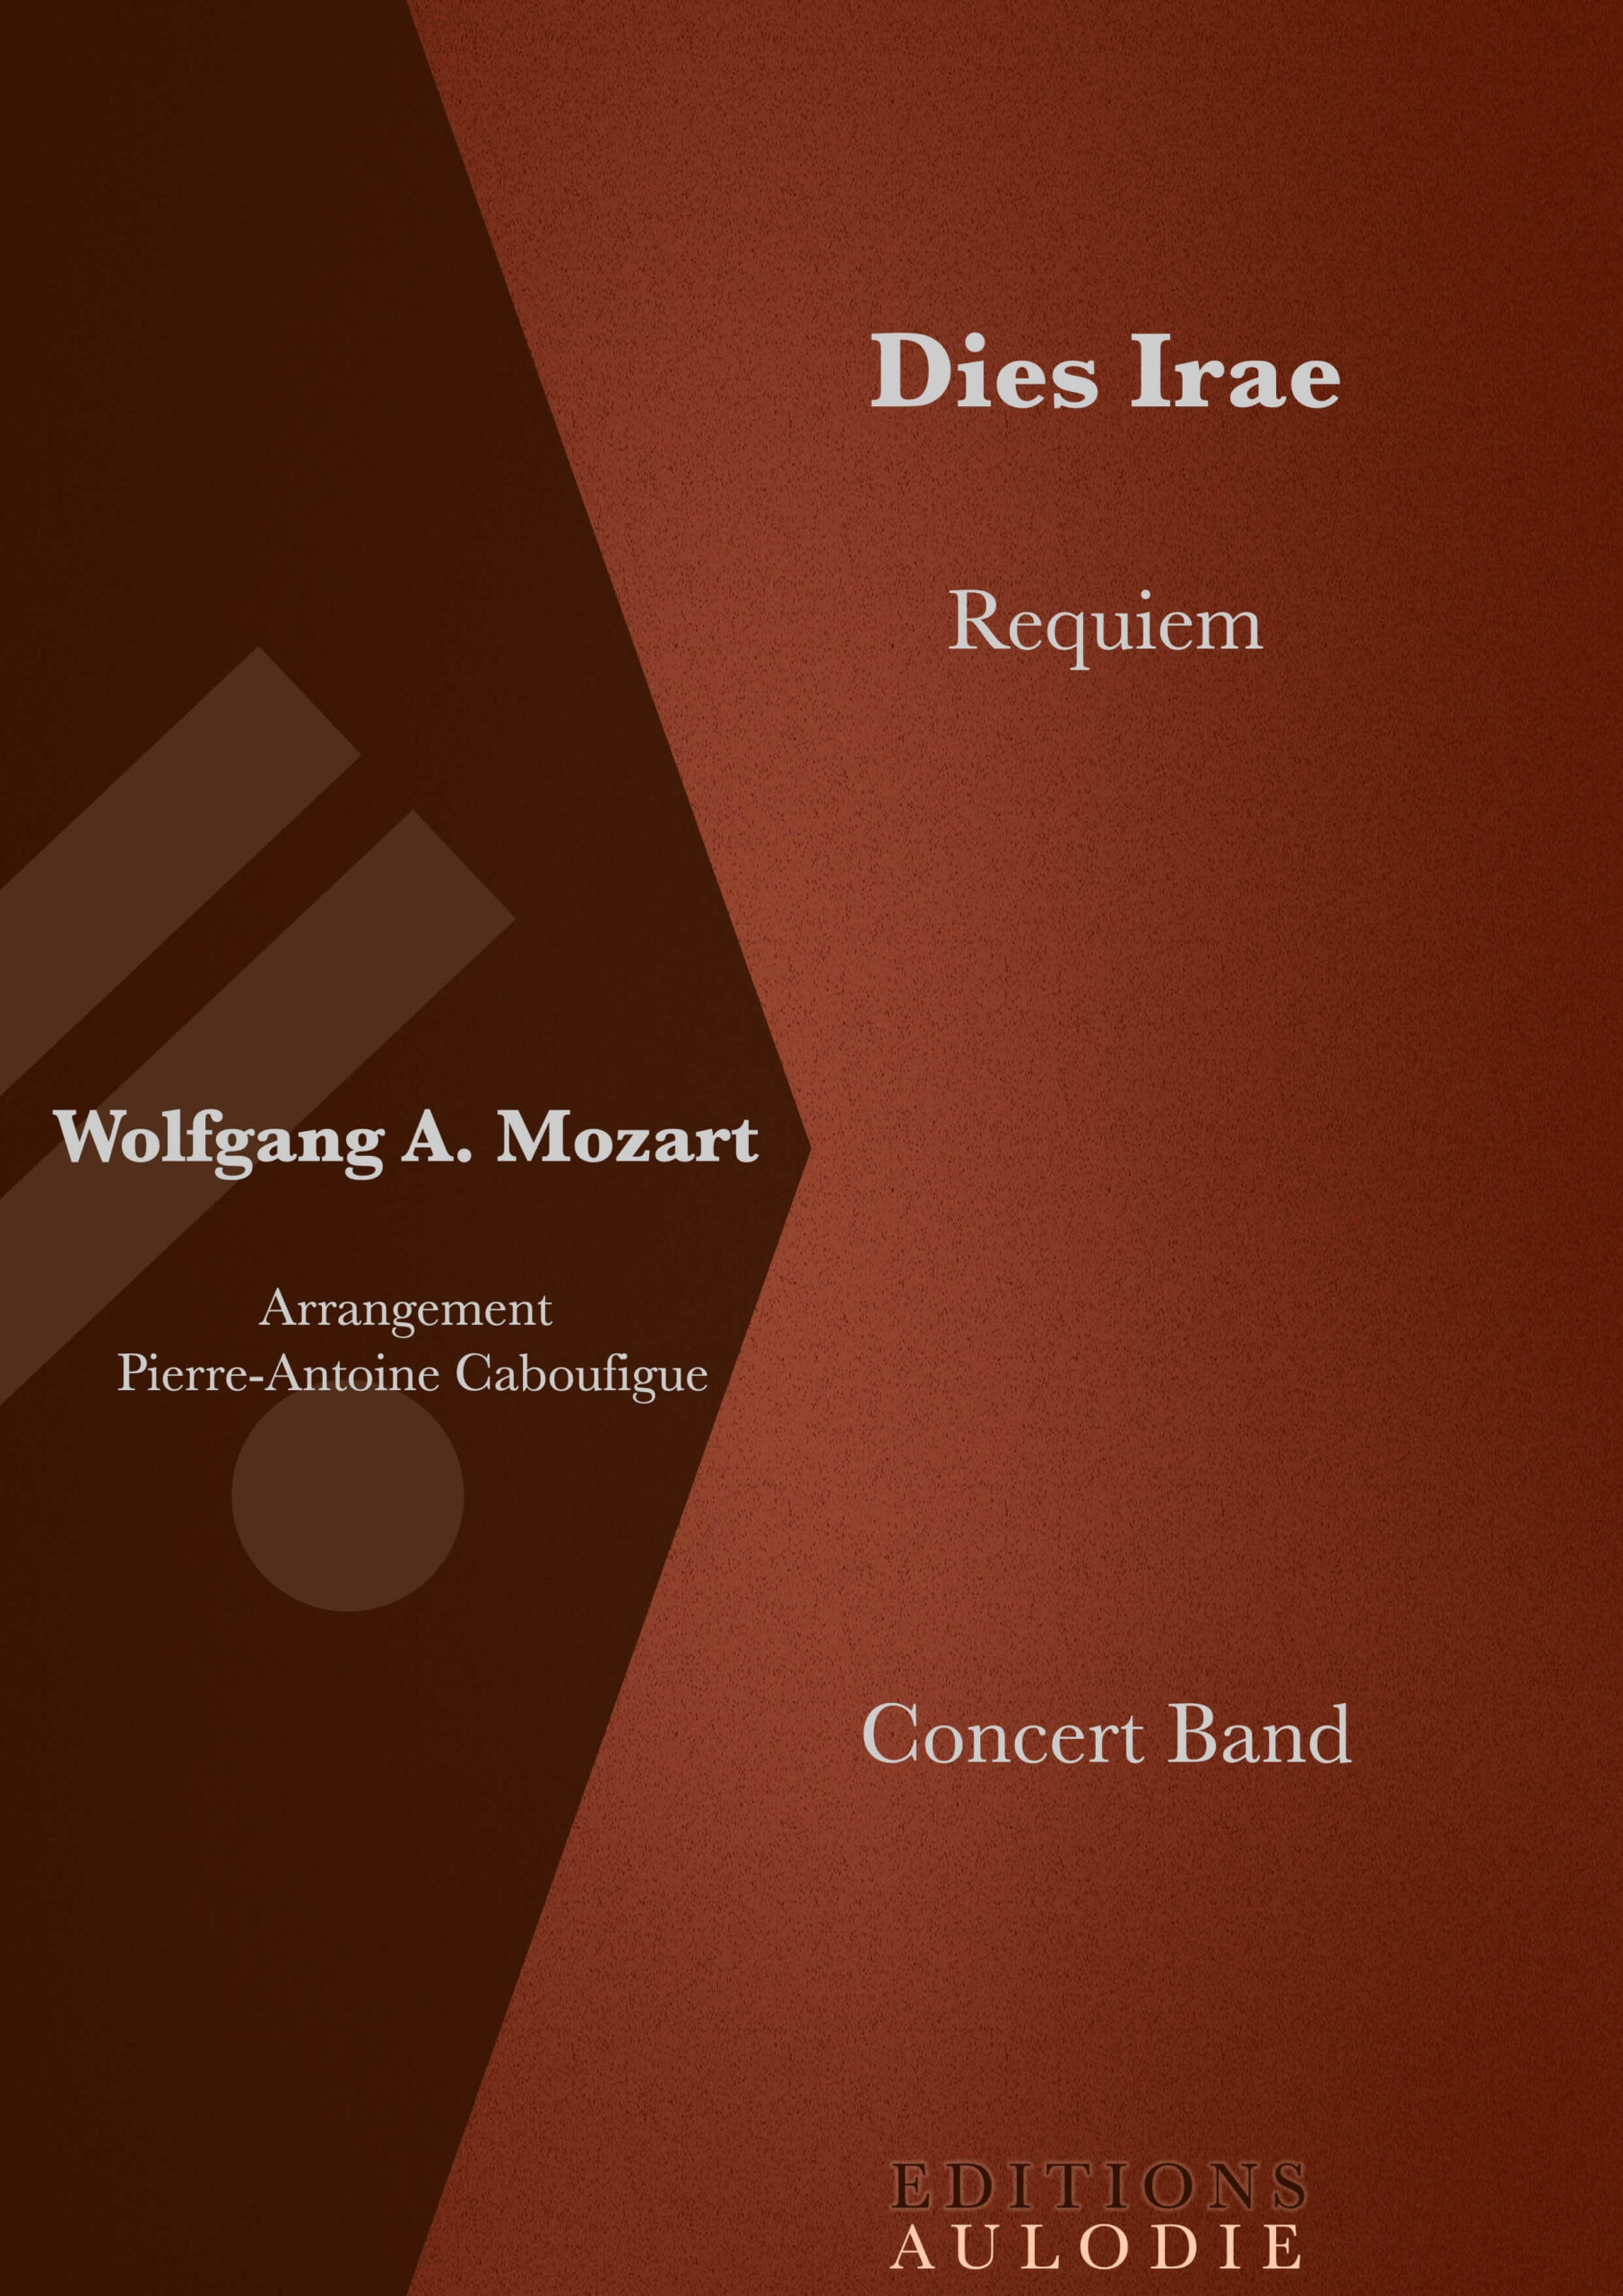 EA01037-Dies_Irae-Requiem-Wolfgang_Amadeus_Mozart-Concert_Band